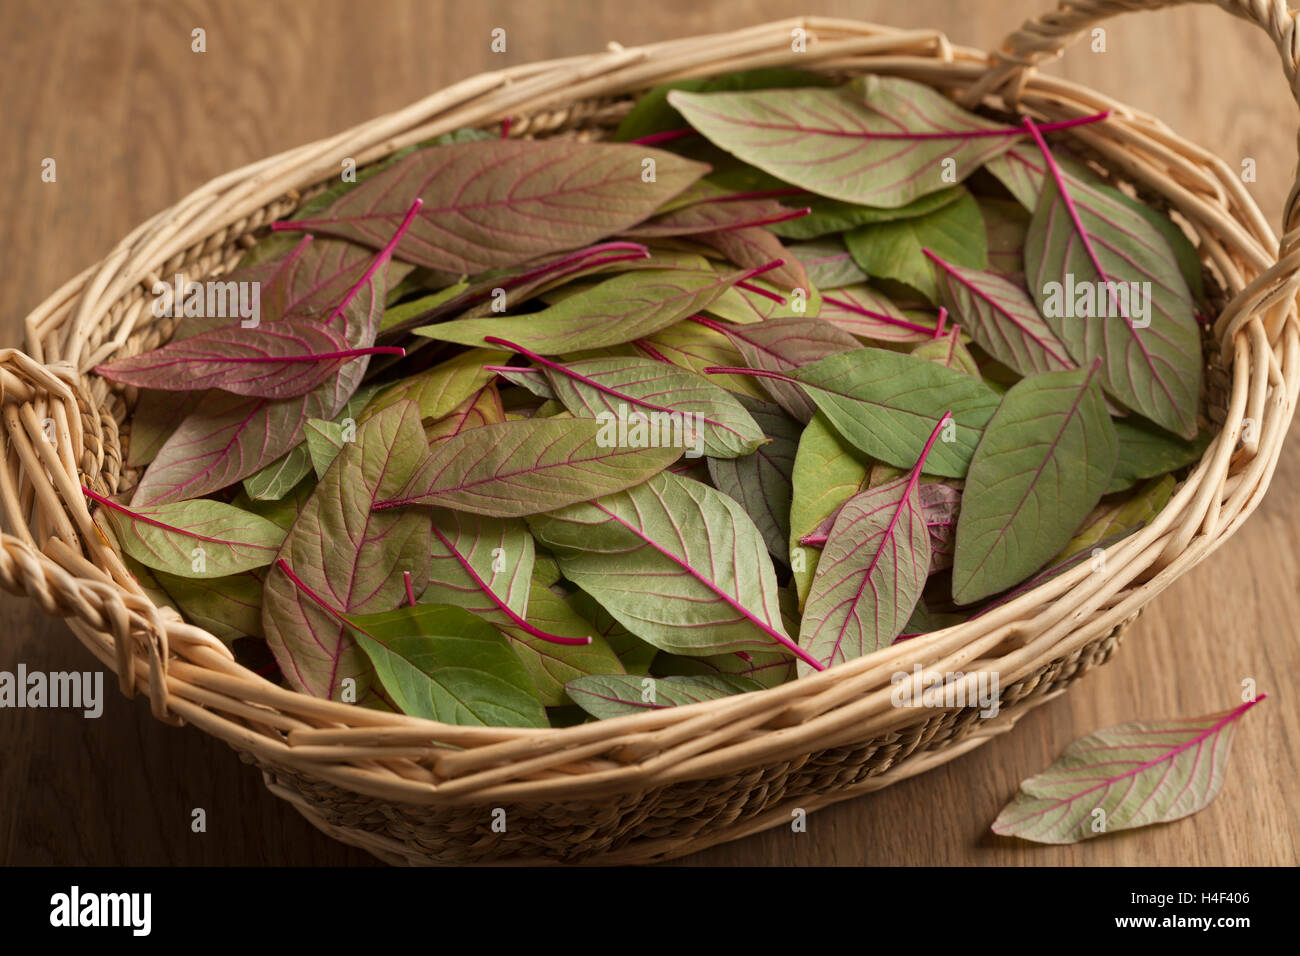 Basket with fresh raw amaranth leaves Stock Photo